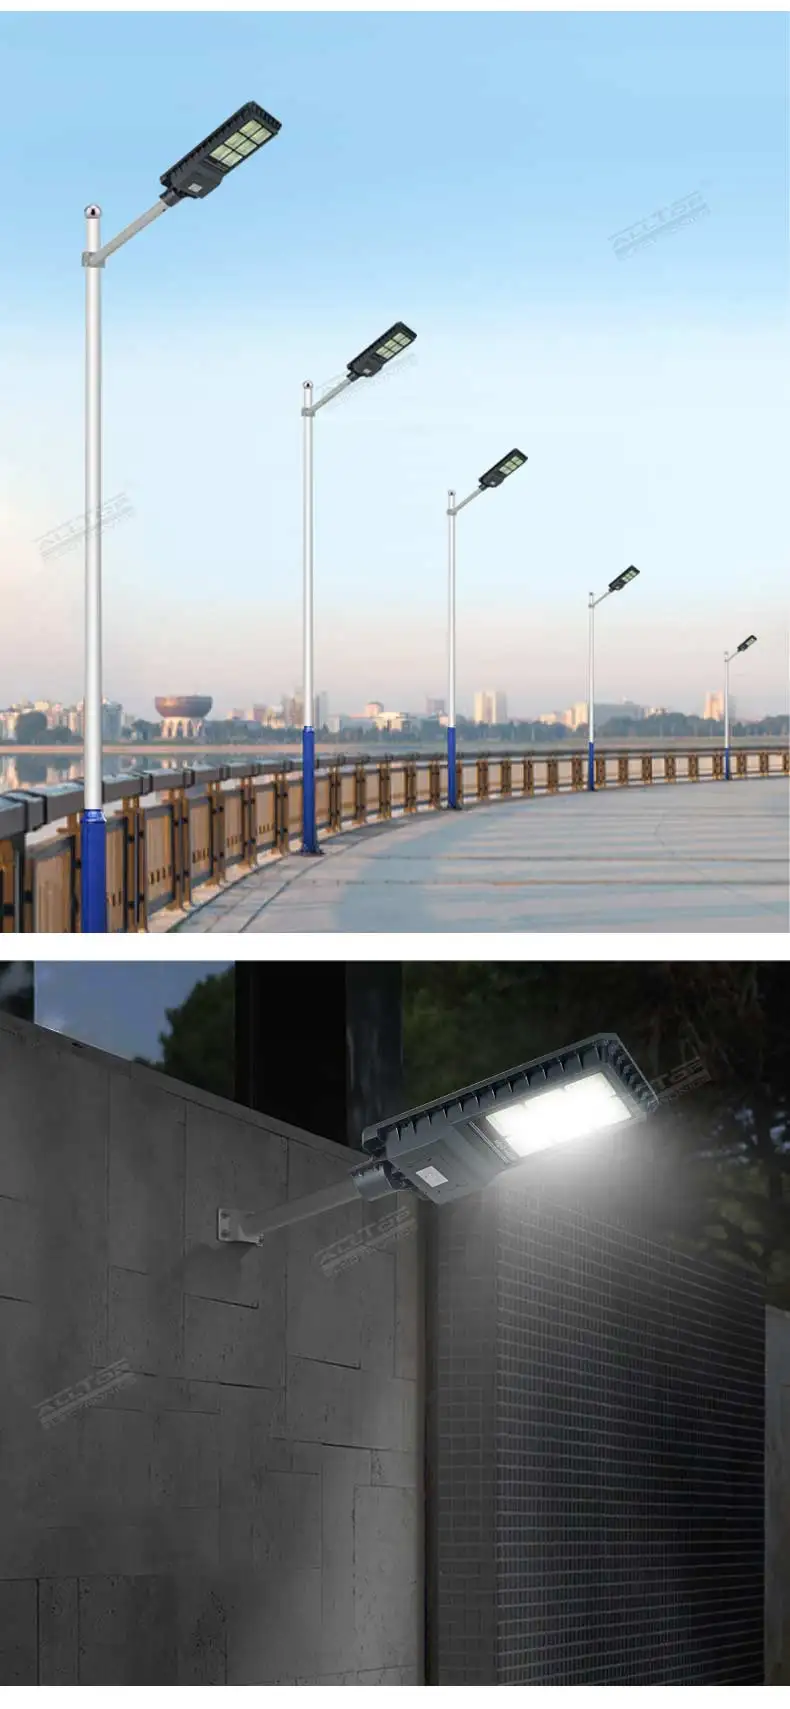 Free sample parking garden lighting outdoor waterproof 200w 300w 450w integrated led solar street light